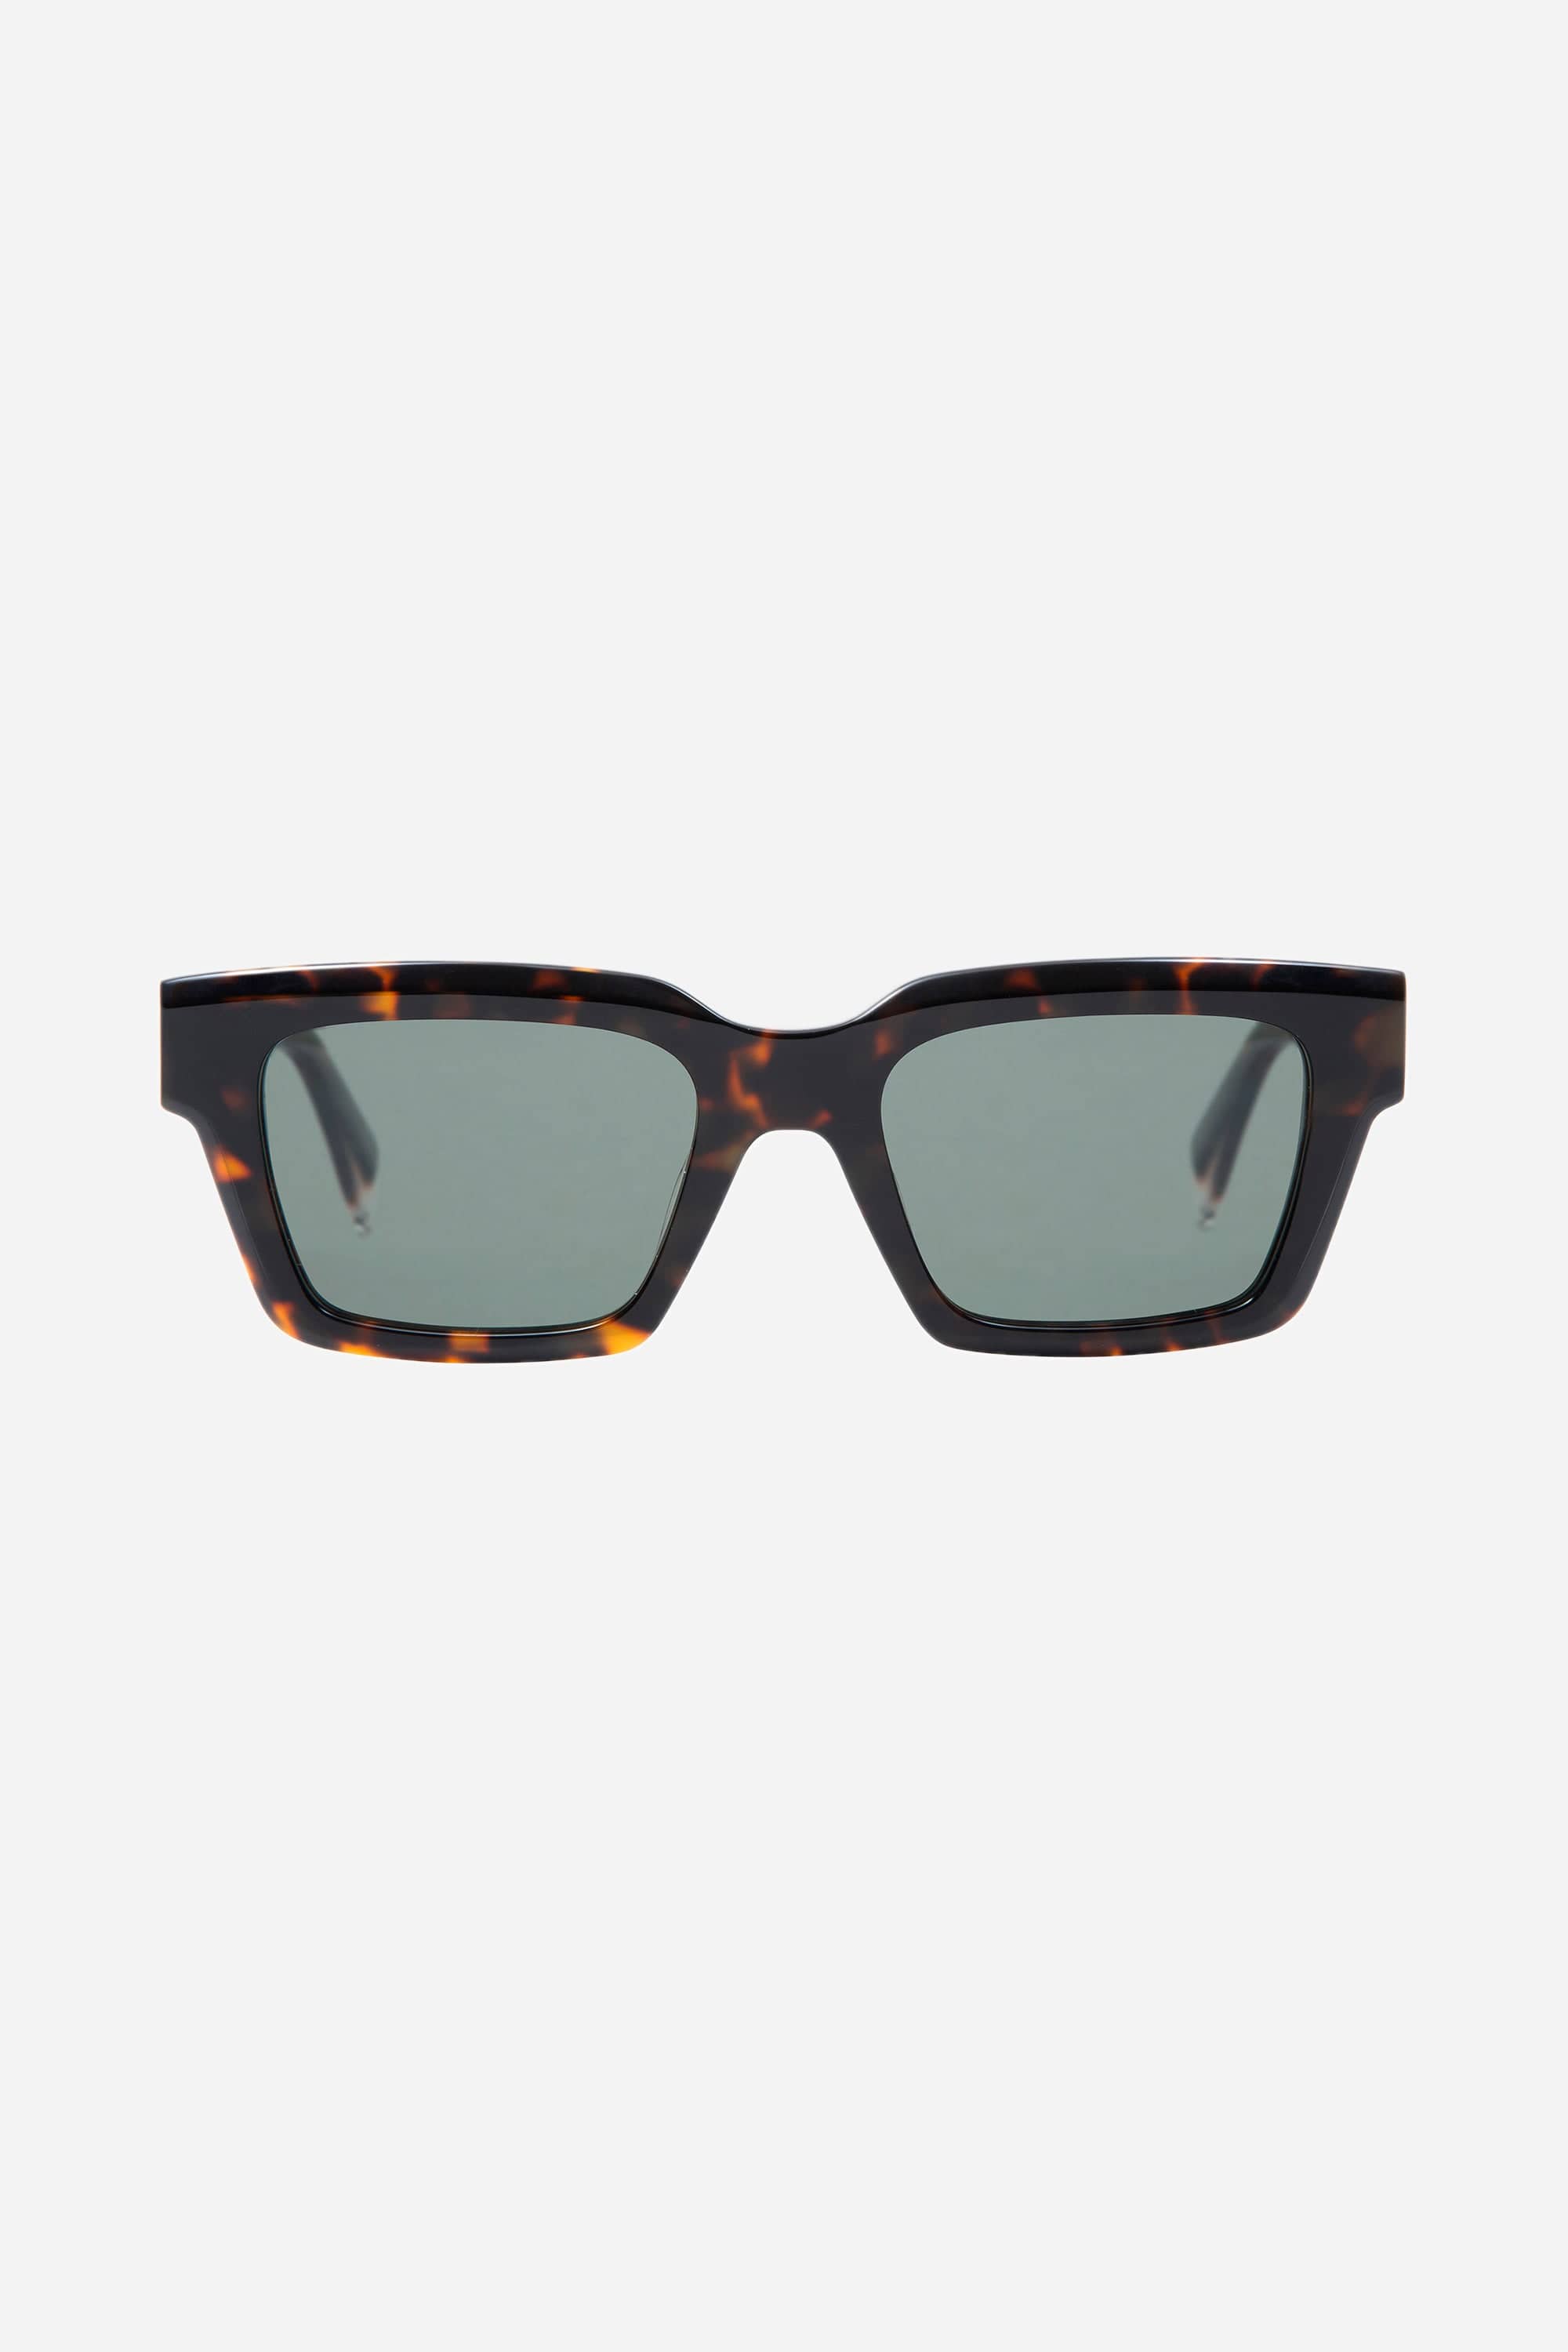 Gigi Studios squared havana sunglasses - Eyewear Club